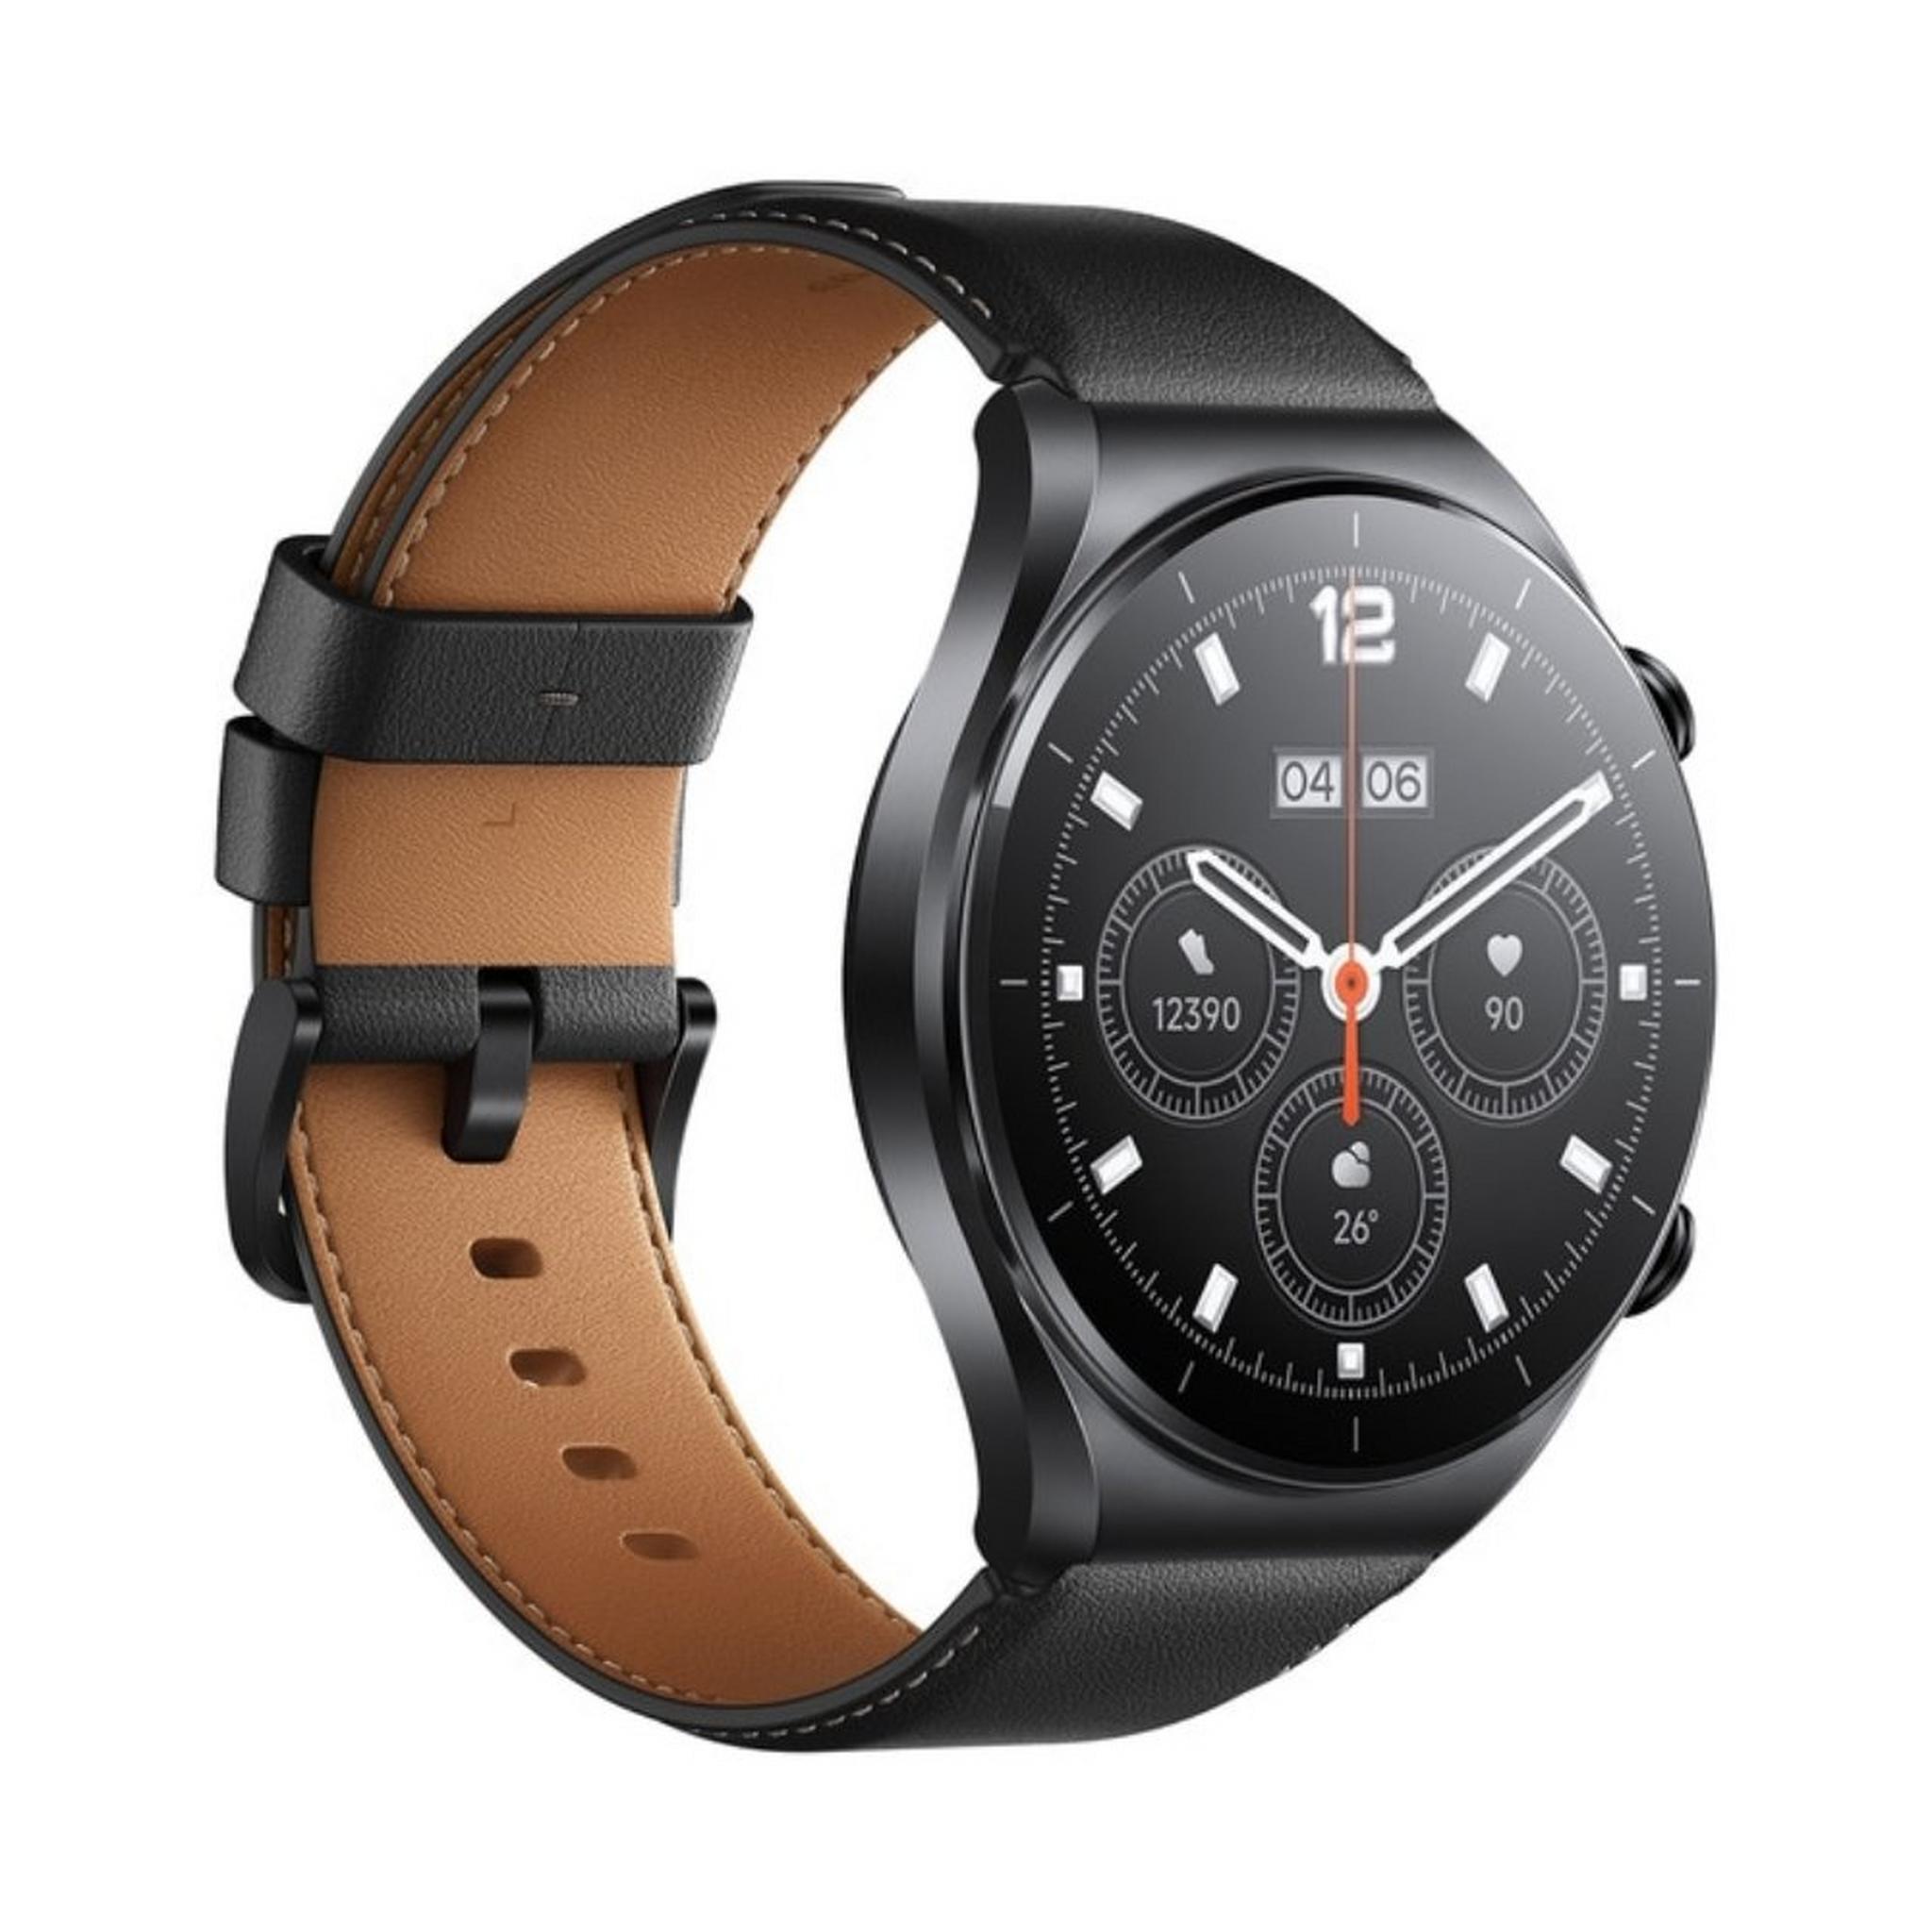 Xiaomi S1 GL Smart Watch, 46mm, Stainless Steel body, Leather Strap - Black